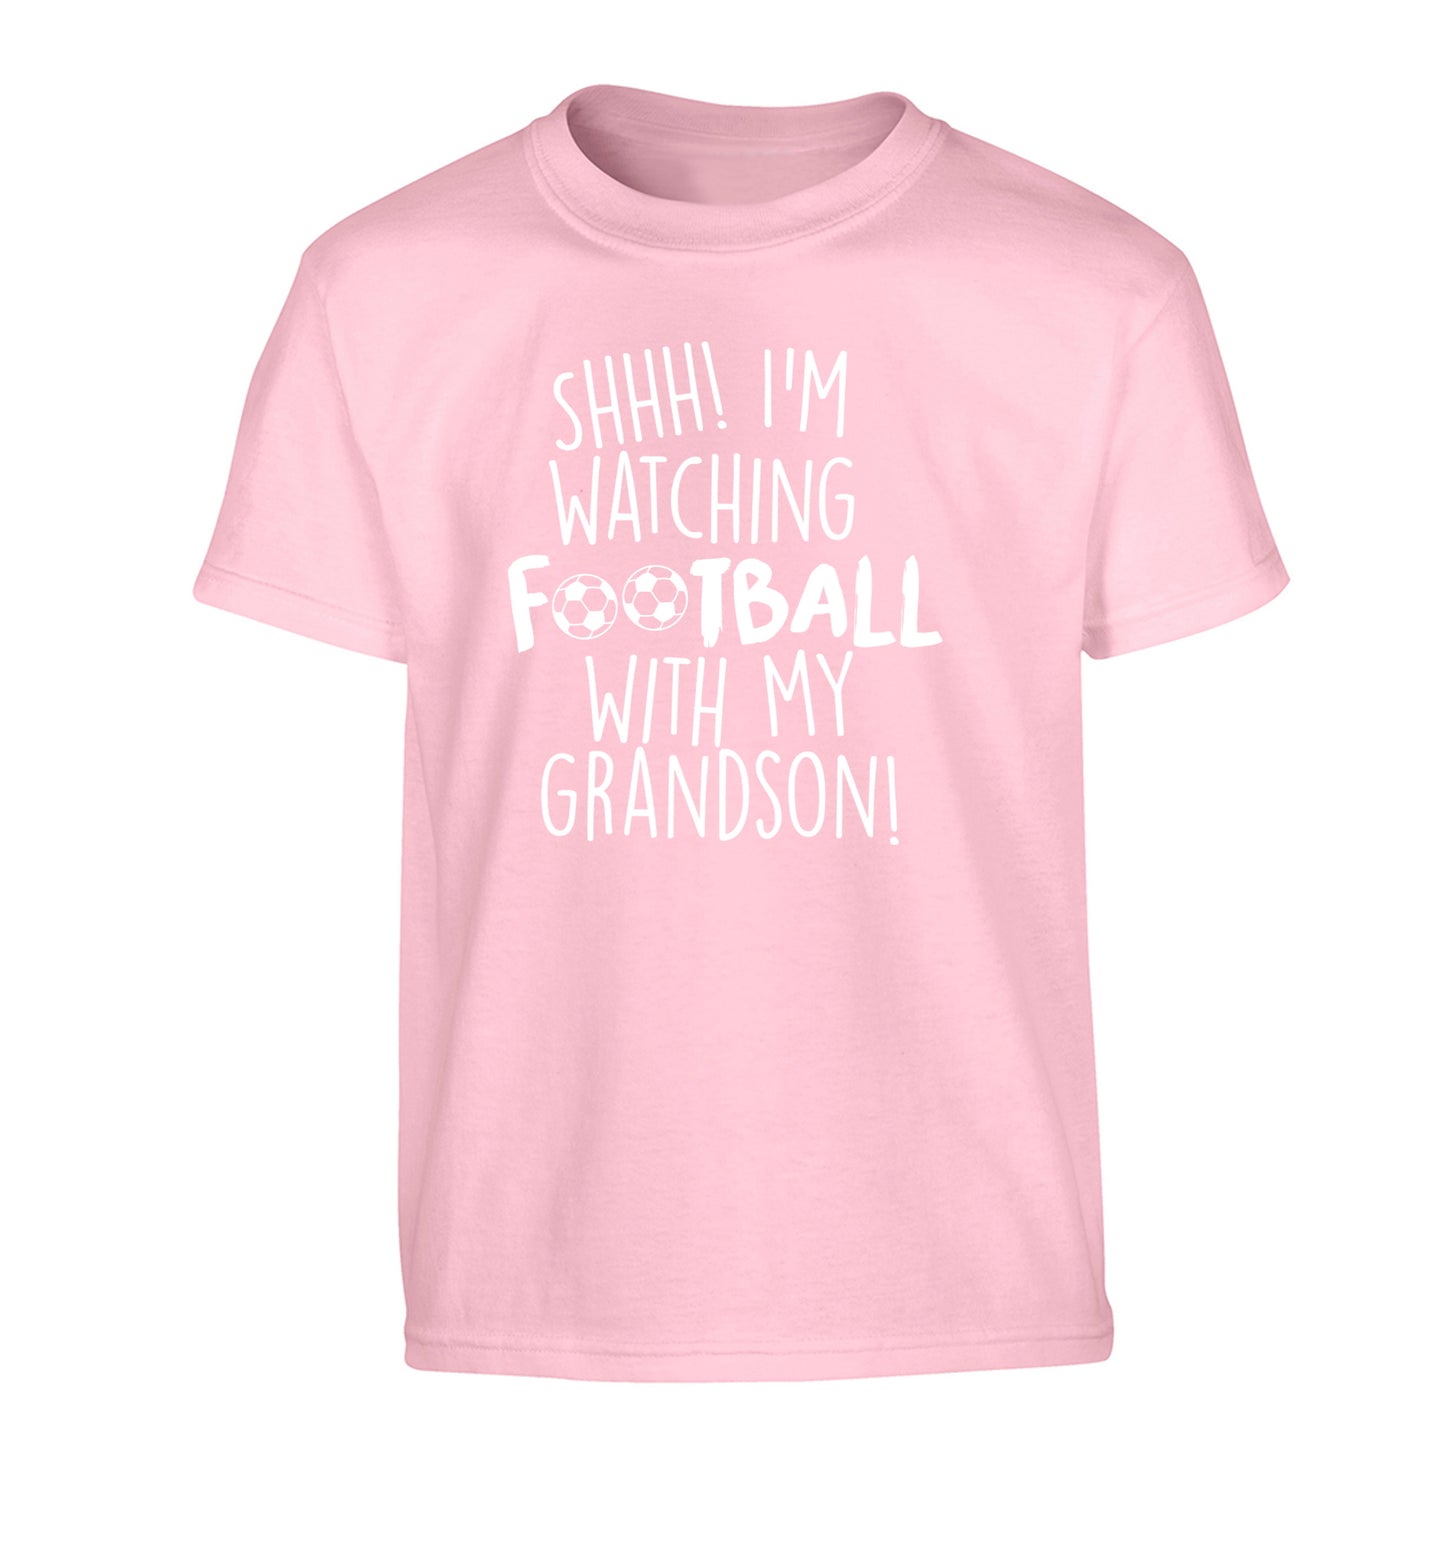 Shhh I'm watching football with my grandson Children's light pink Tshirt 12-14 Years